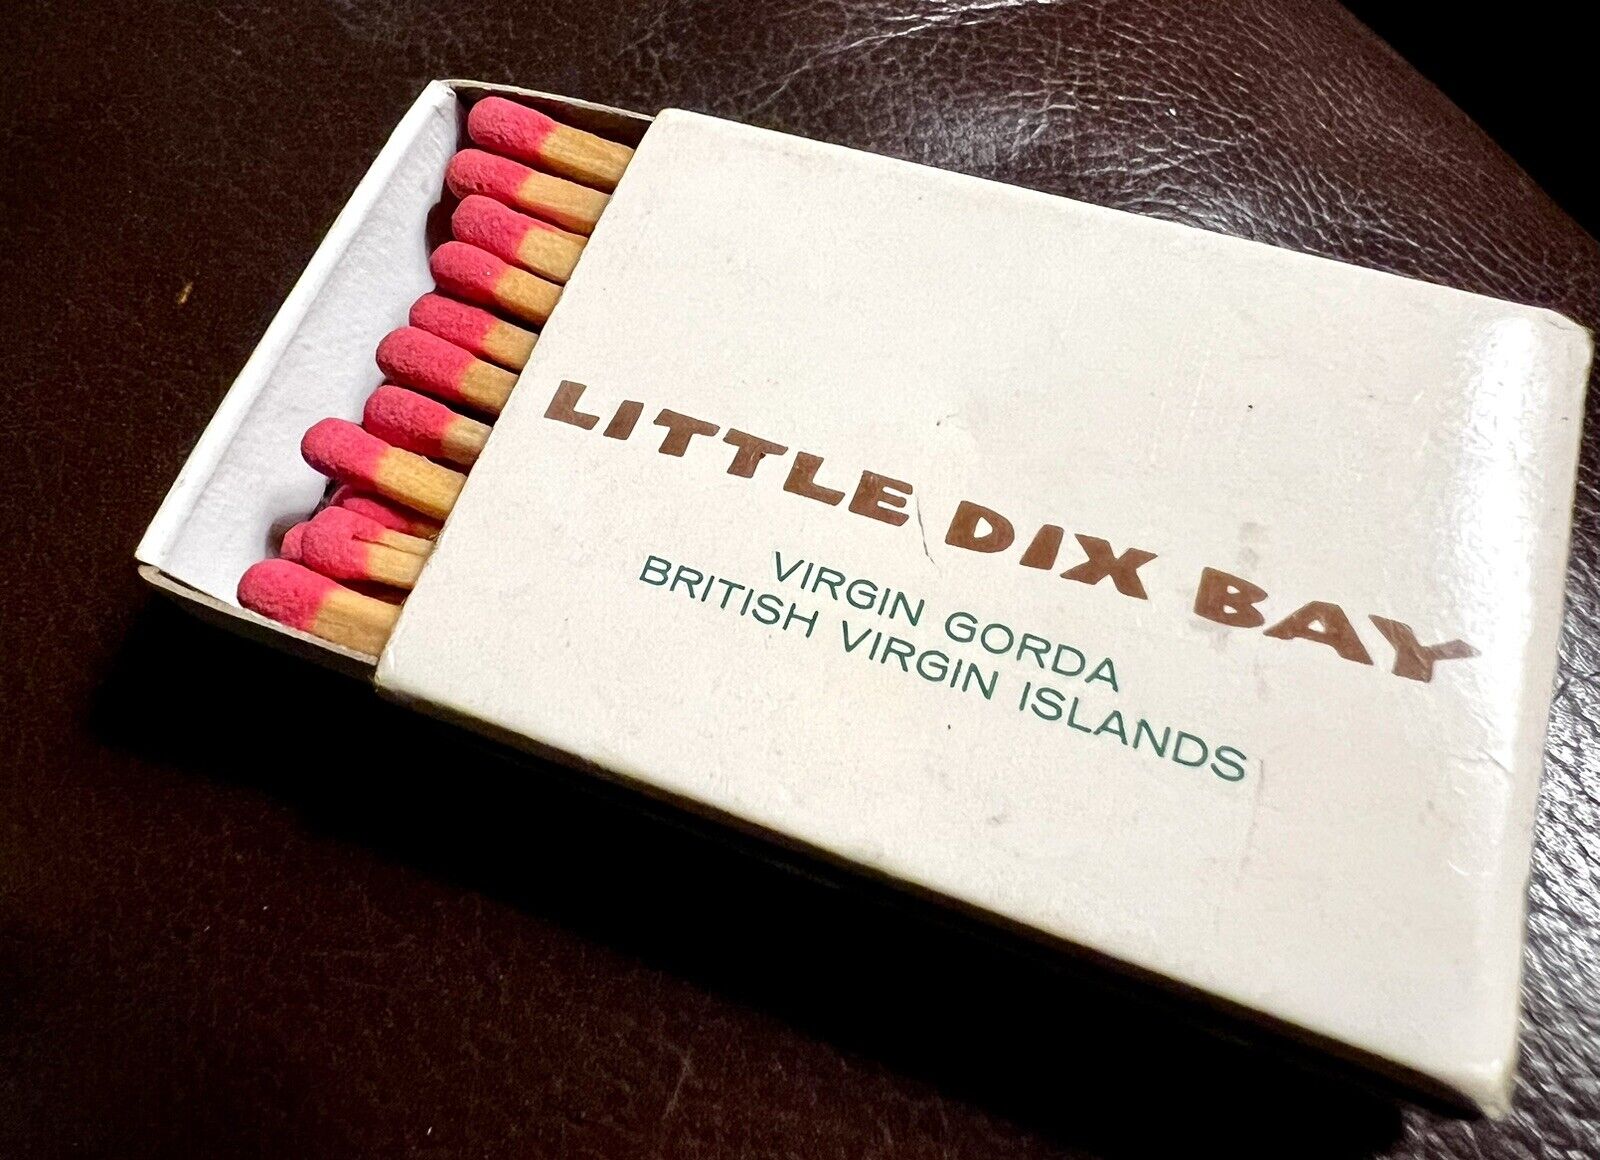 Little Dix Bay Resort, Virgin Gorda, British Virgin Islands Matchbox